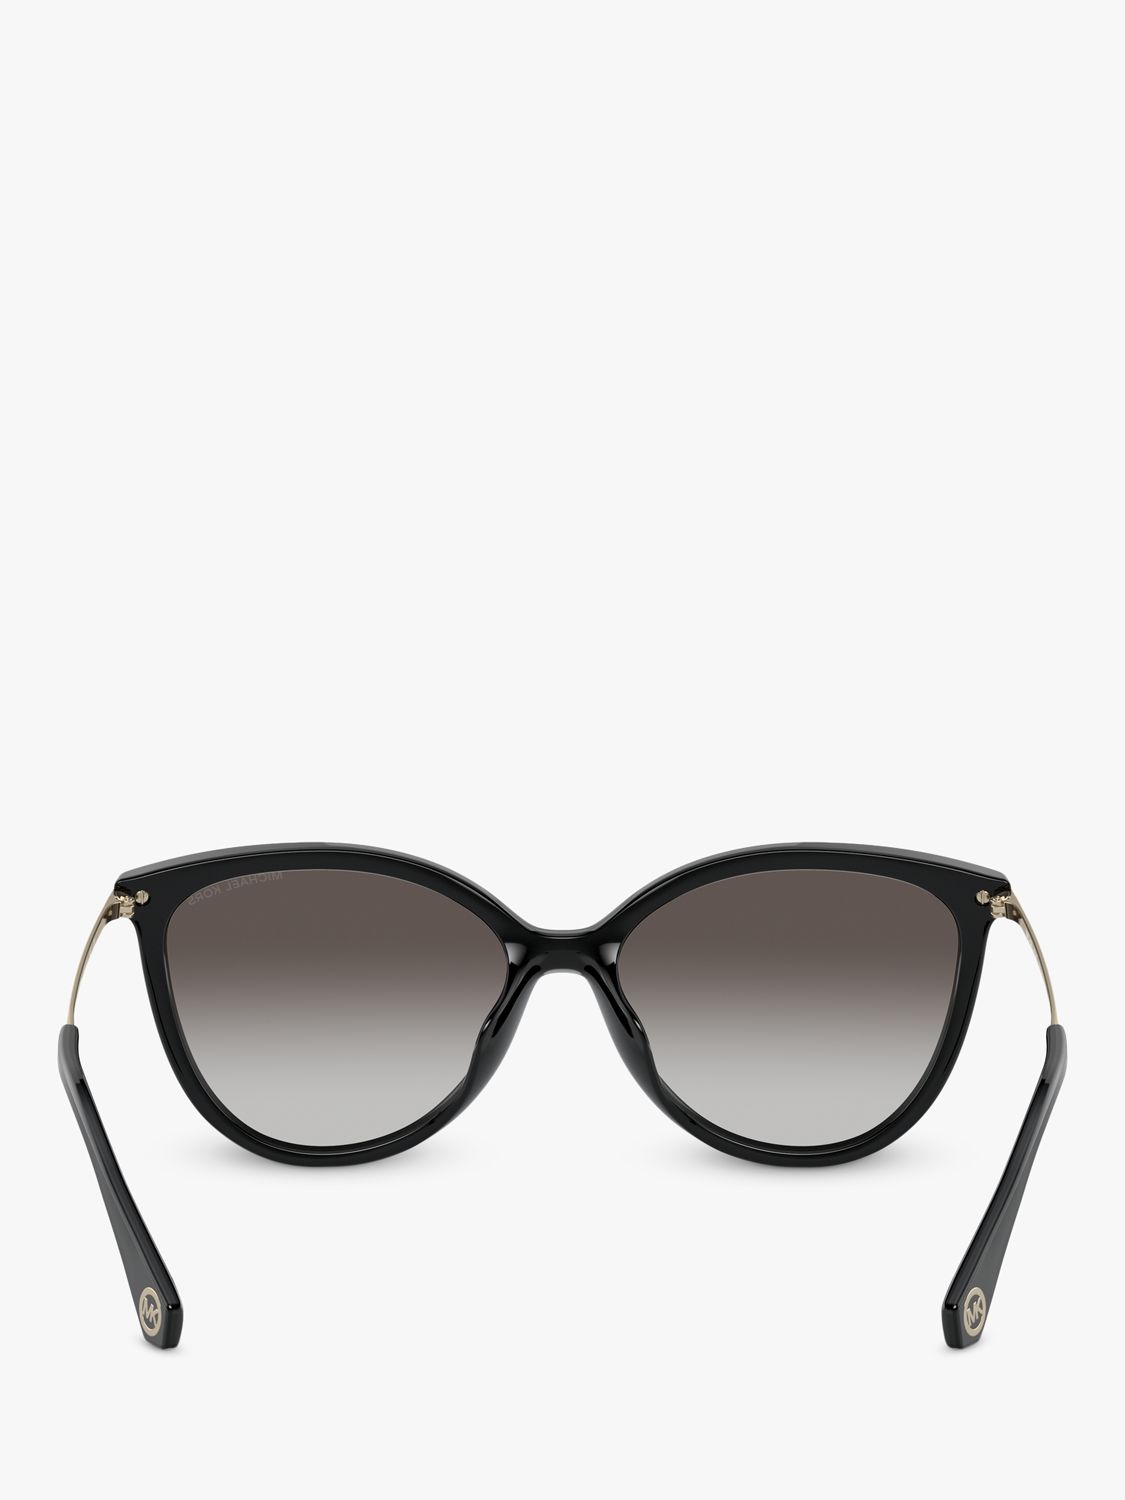 Michael Kors MK2184U Women's Dupont Butterfly Sunglasses, Black/Grey Gradient